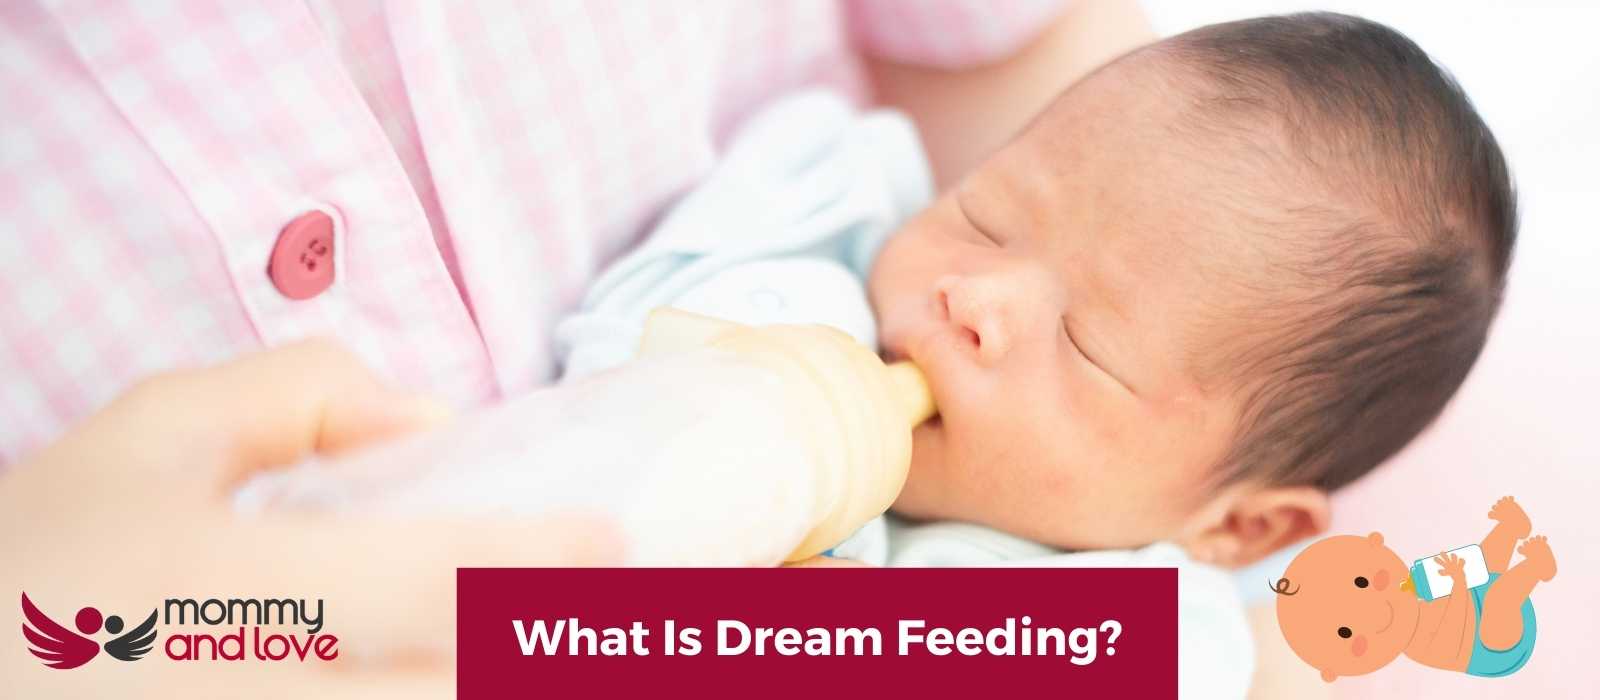 What Is Dream Feeding